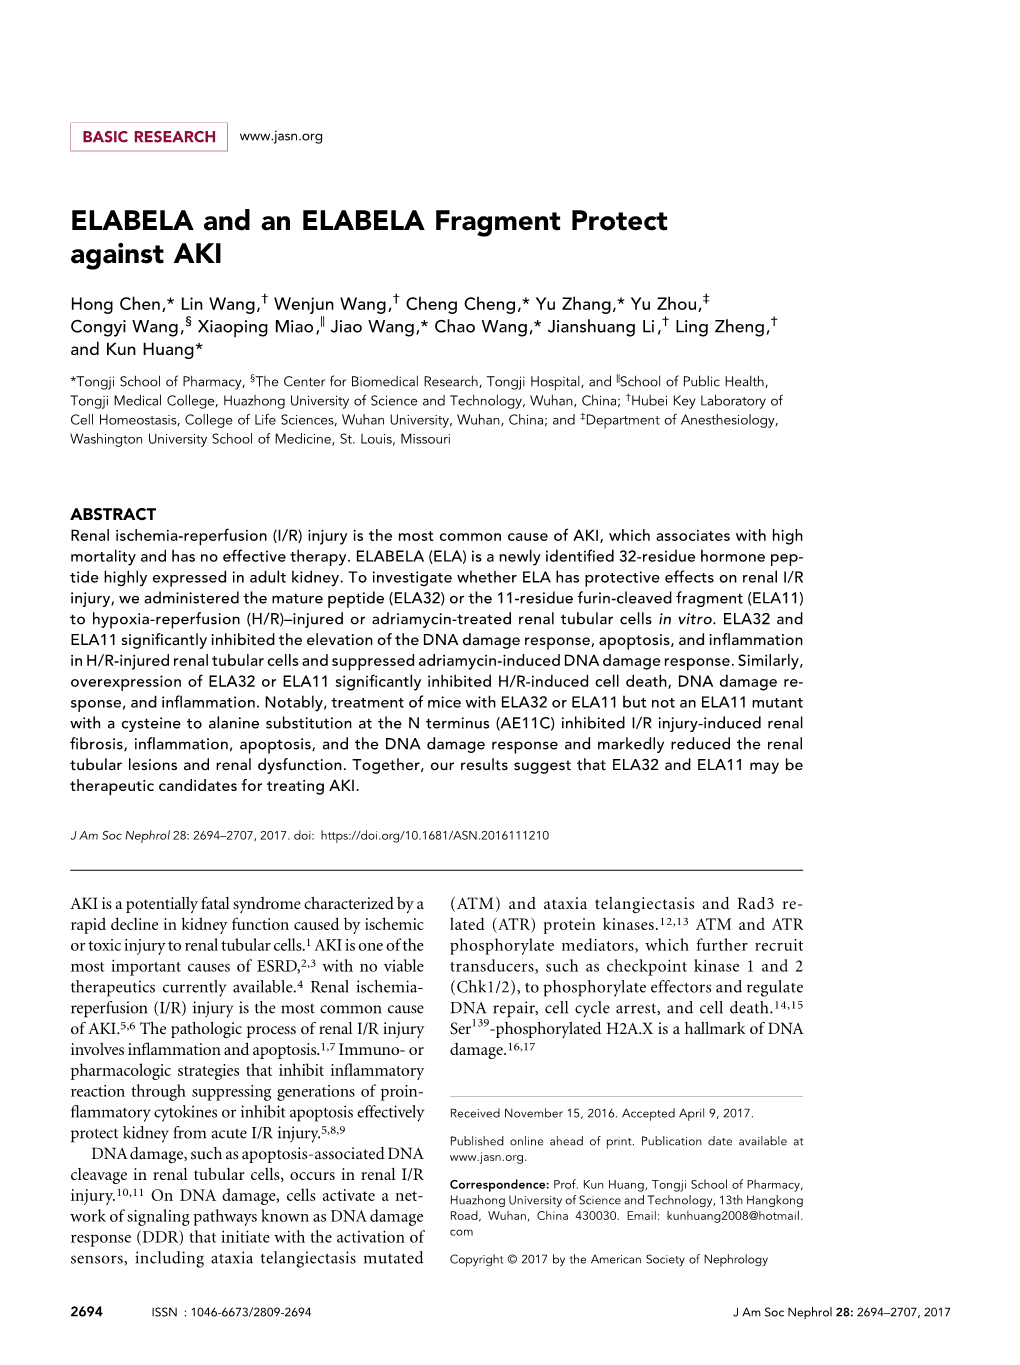 ELABELA and an ELABELA Fragment Protect Against AKI